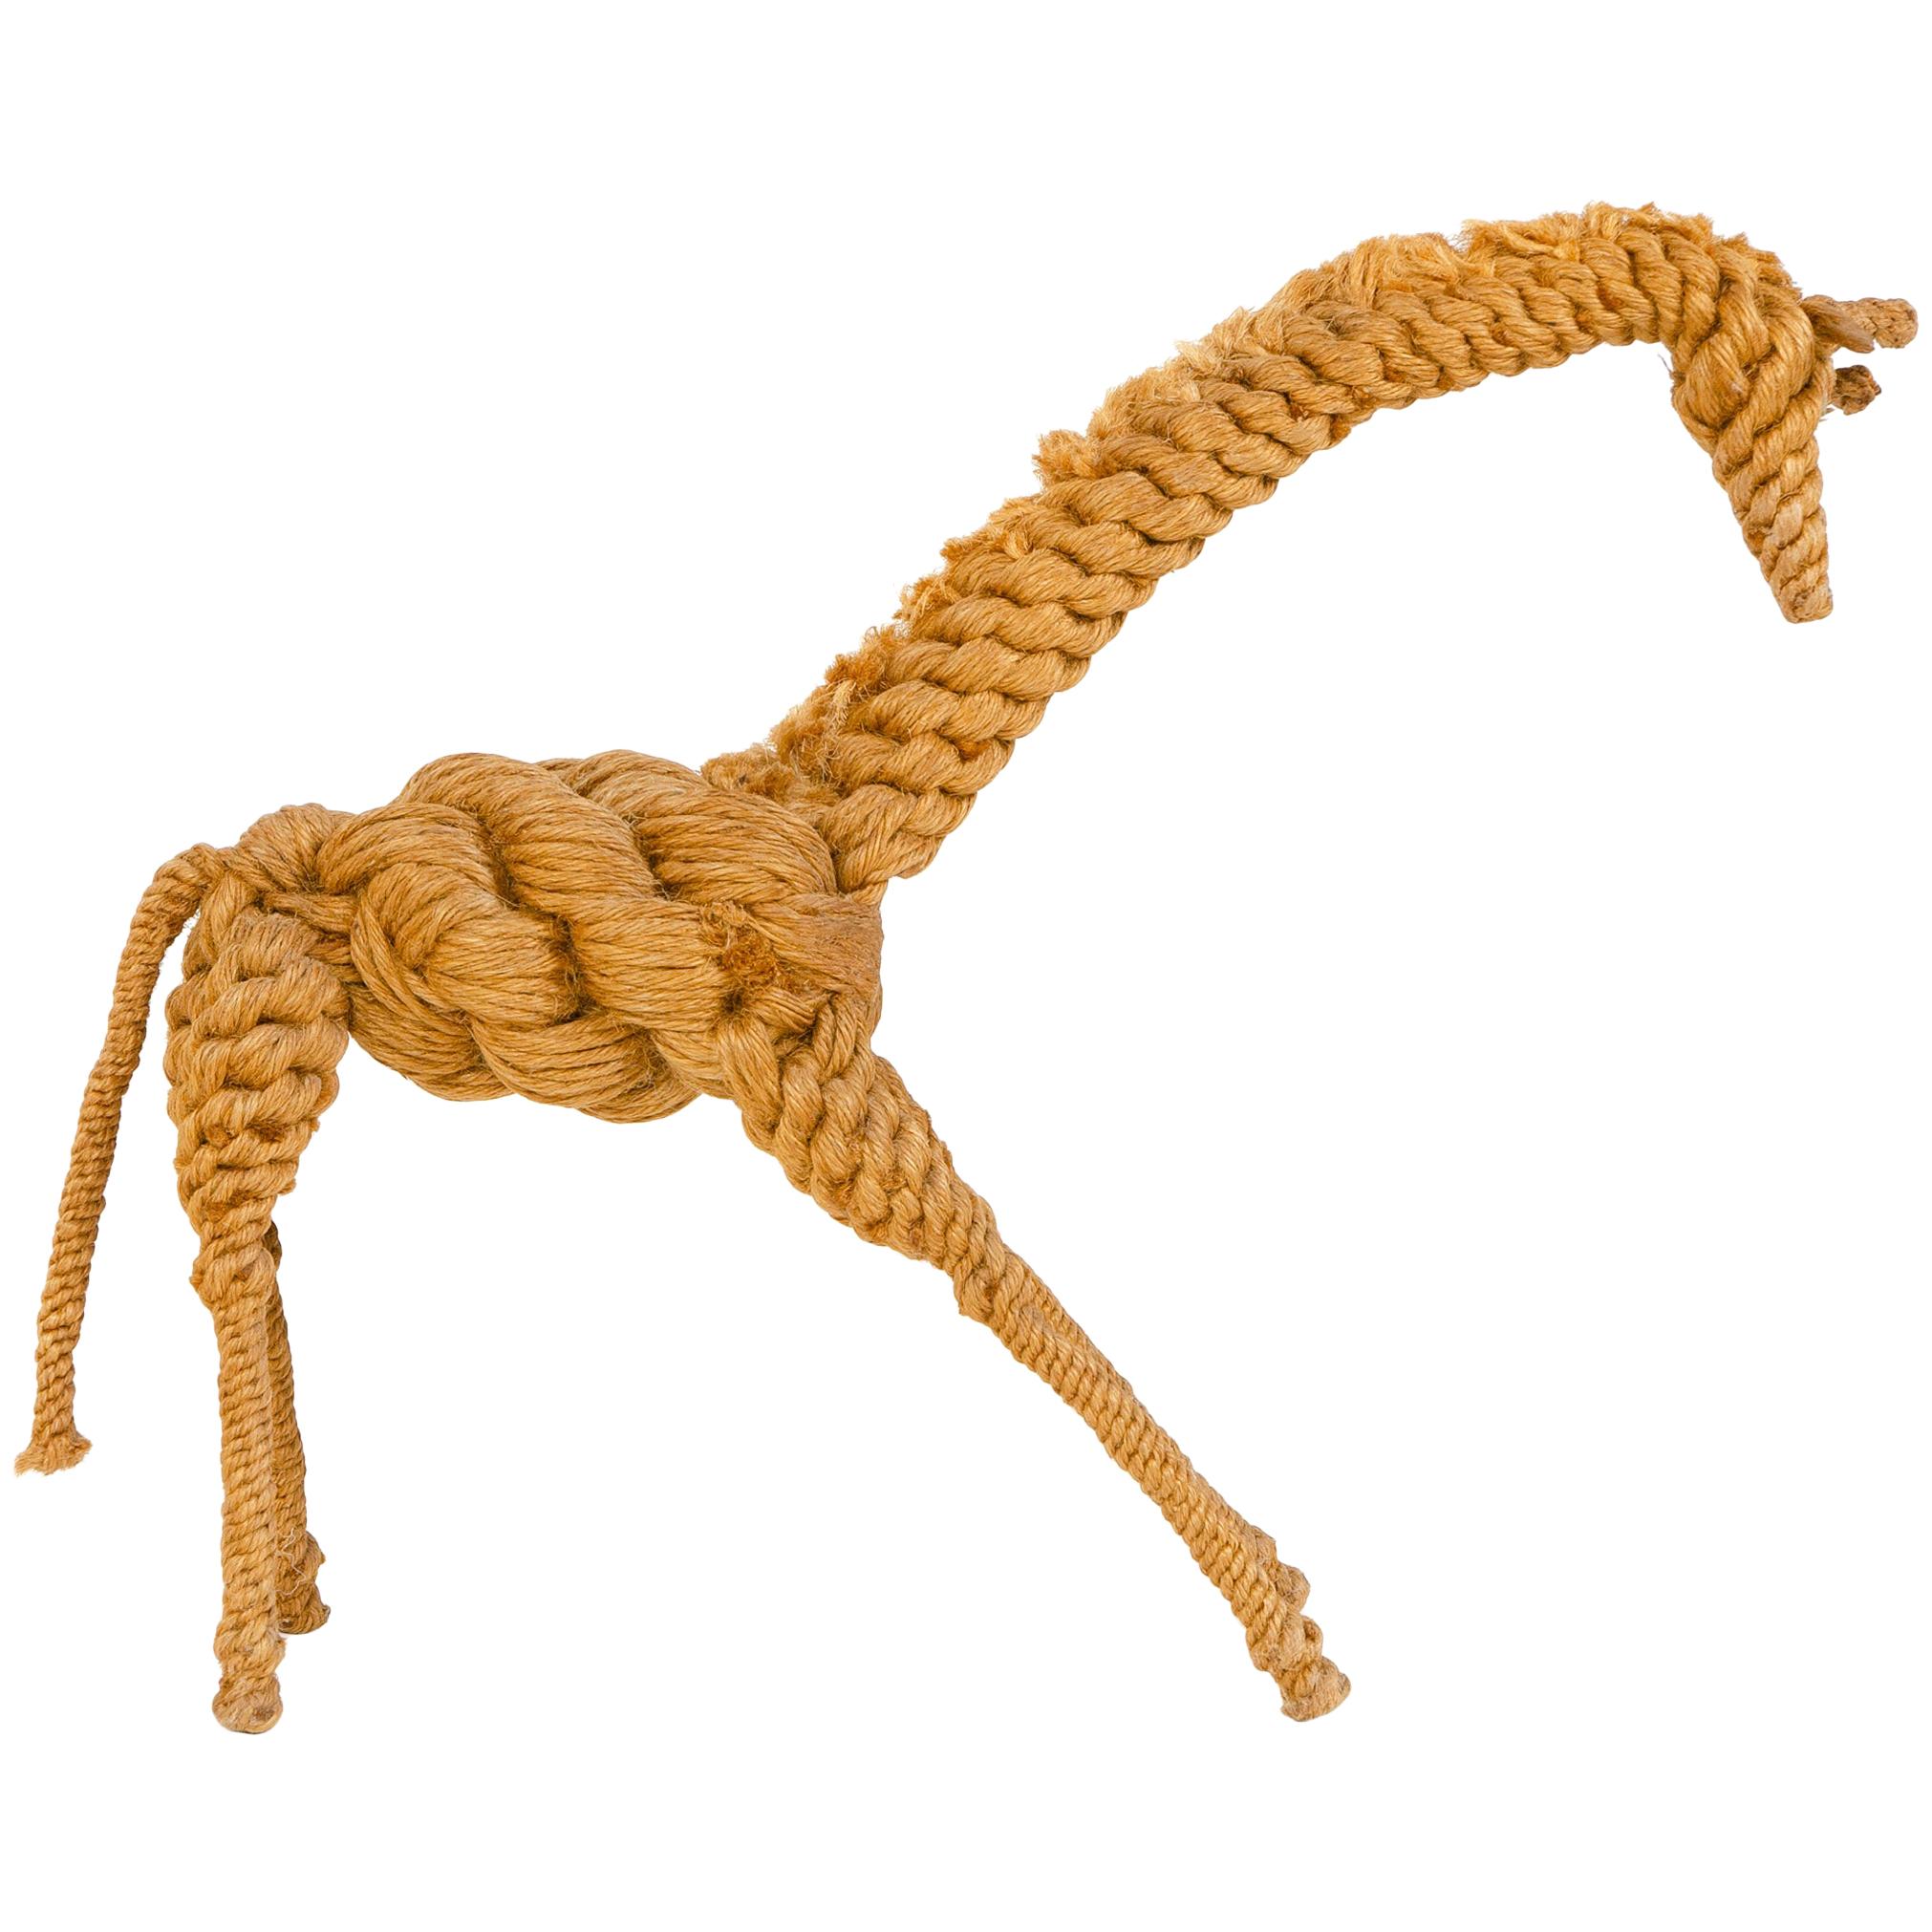 Knotted Rope Giraffe by Kay Bojesen for Jorgen Bloch